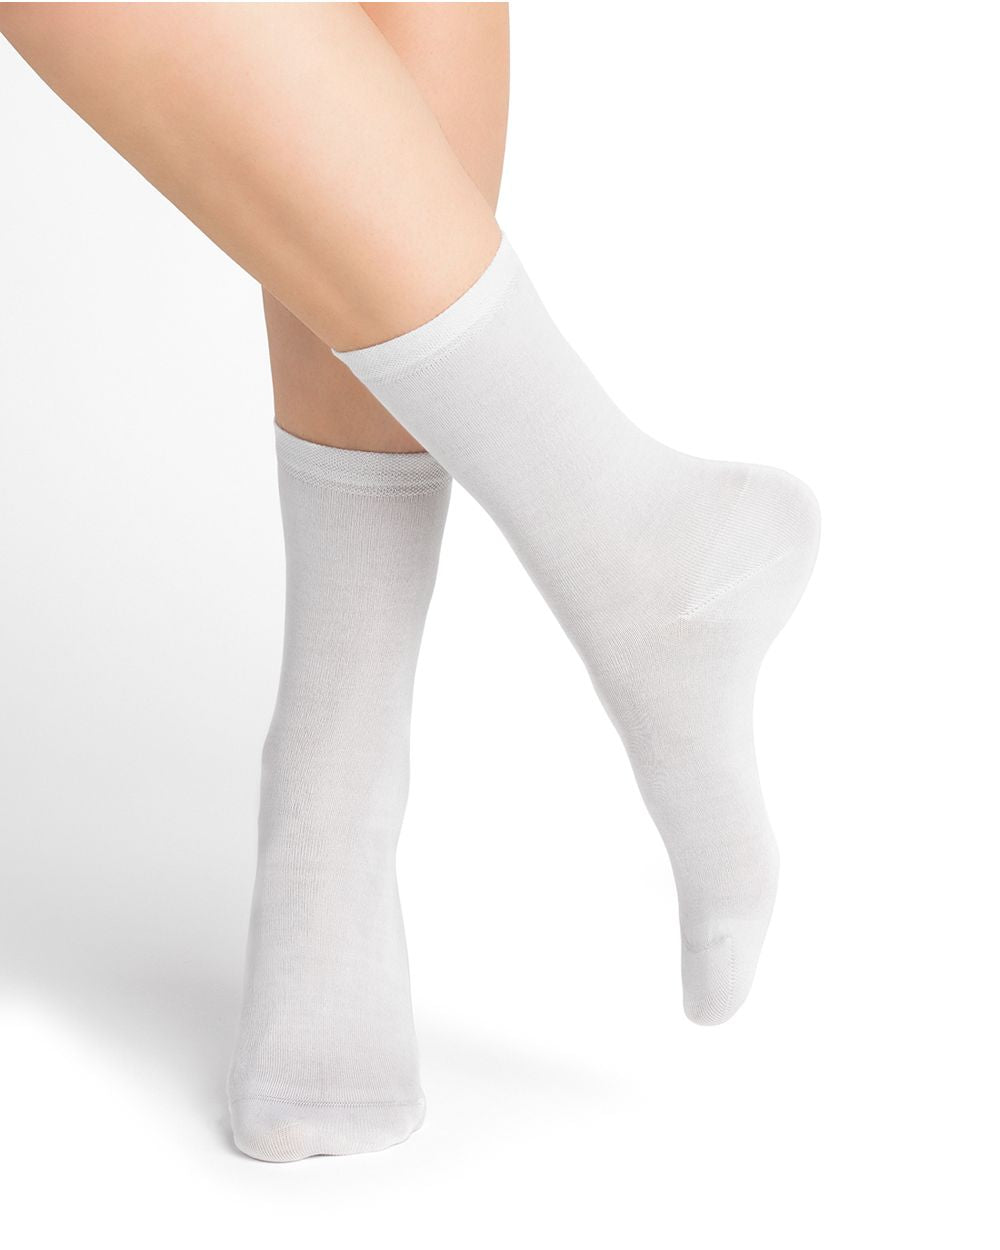 Bleuforêt 91% white silk socks